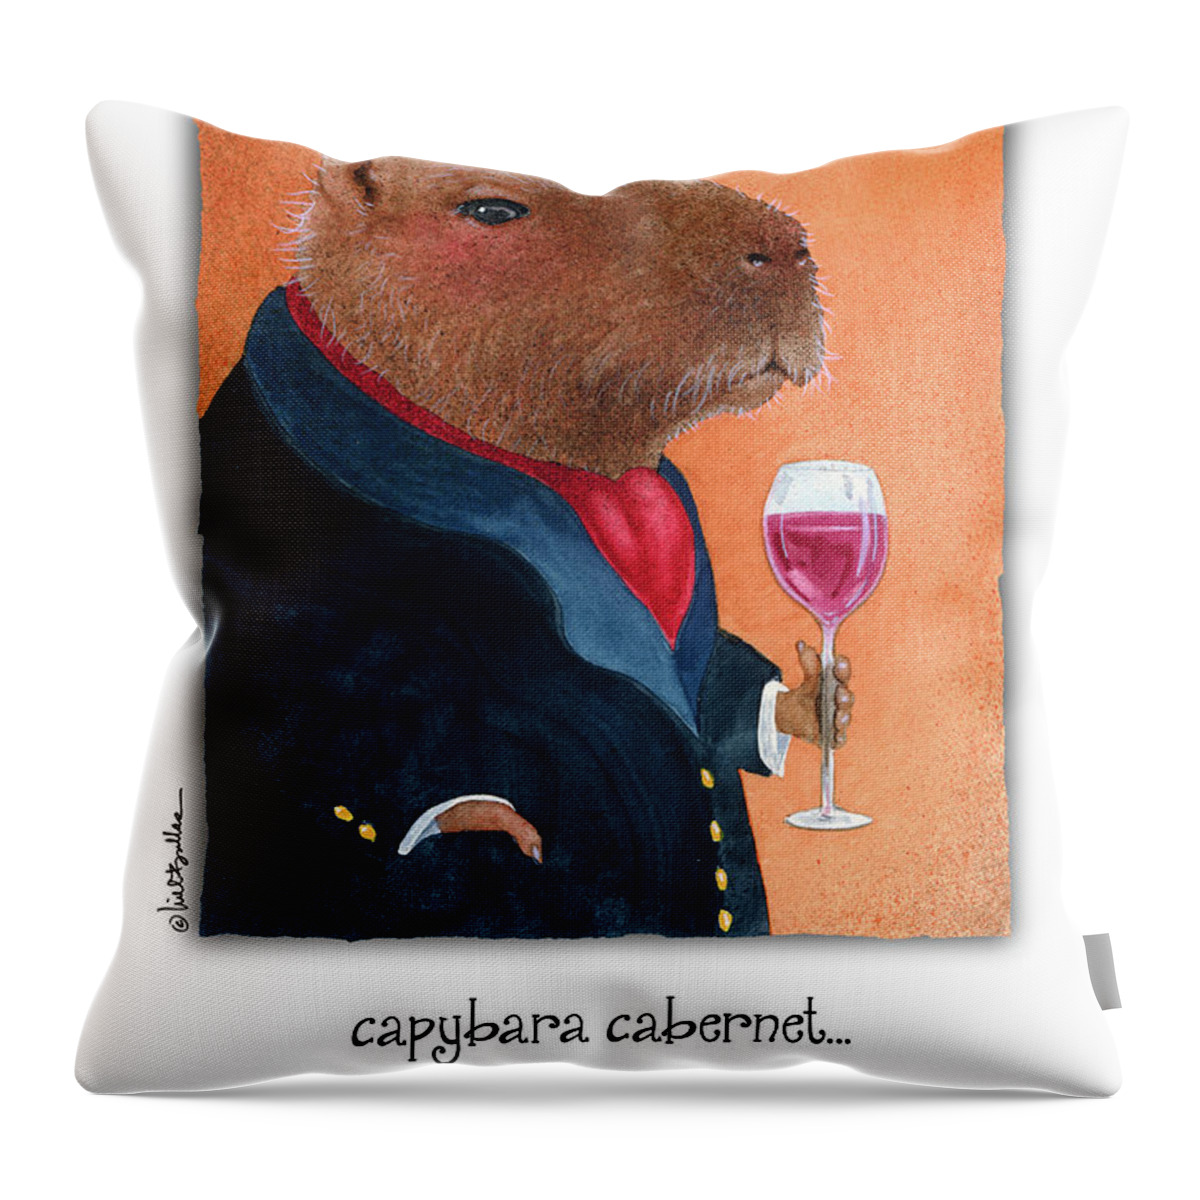 Capybara Throw Pillow featuring the painting Capybara Cabernet... #1 by Will Bullas